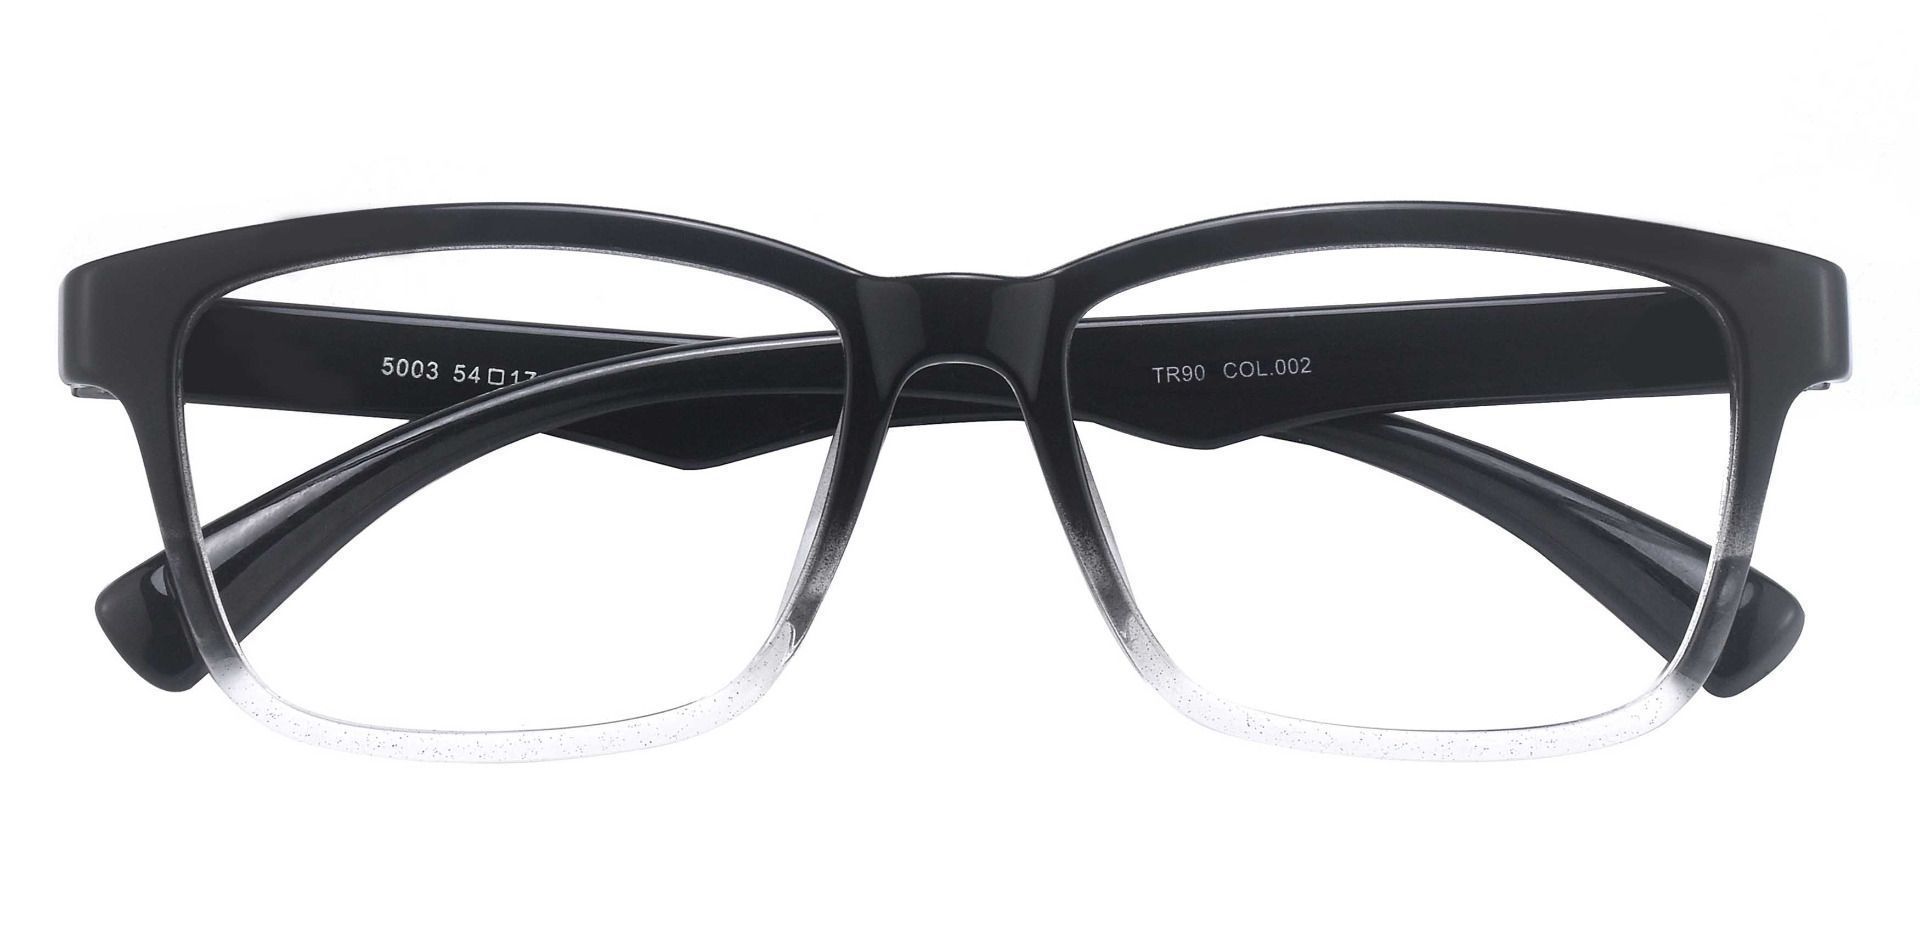 Hoover Rectangle Prescription Glasses - Black